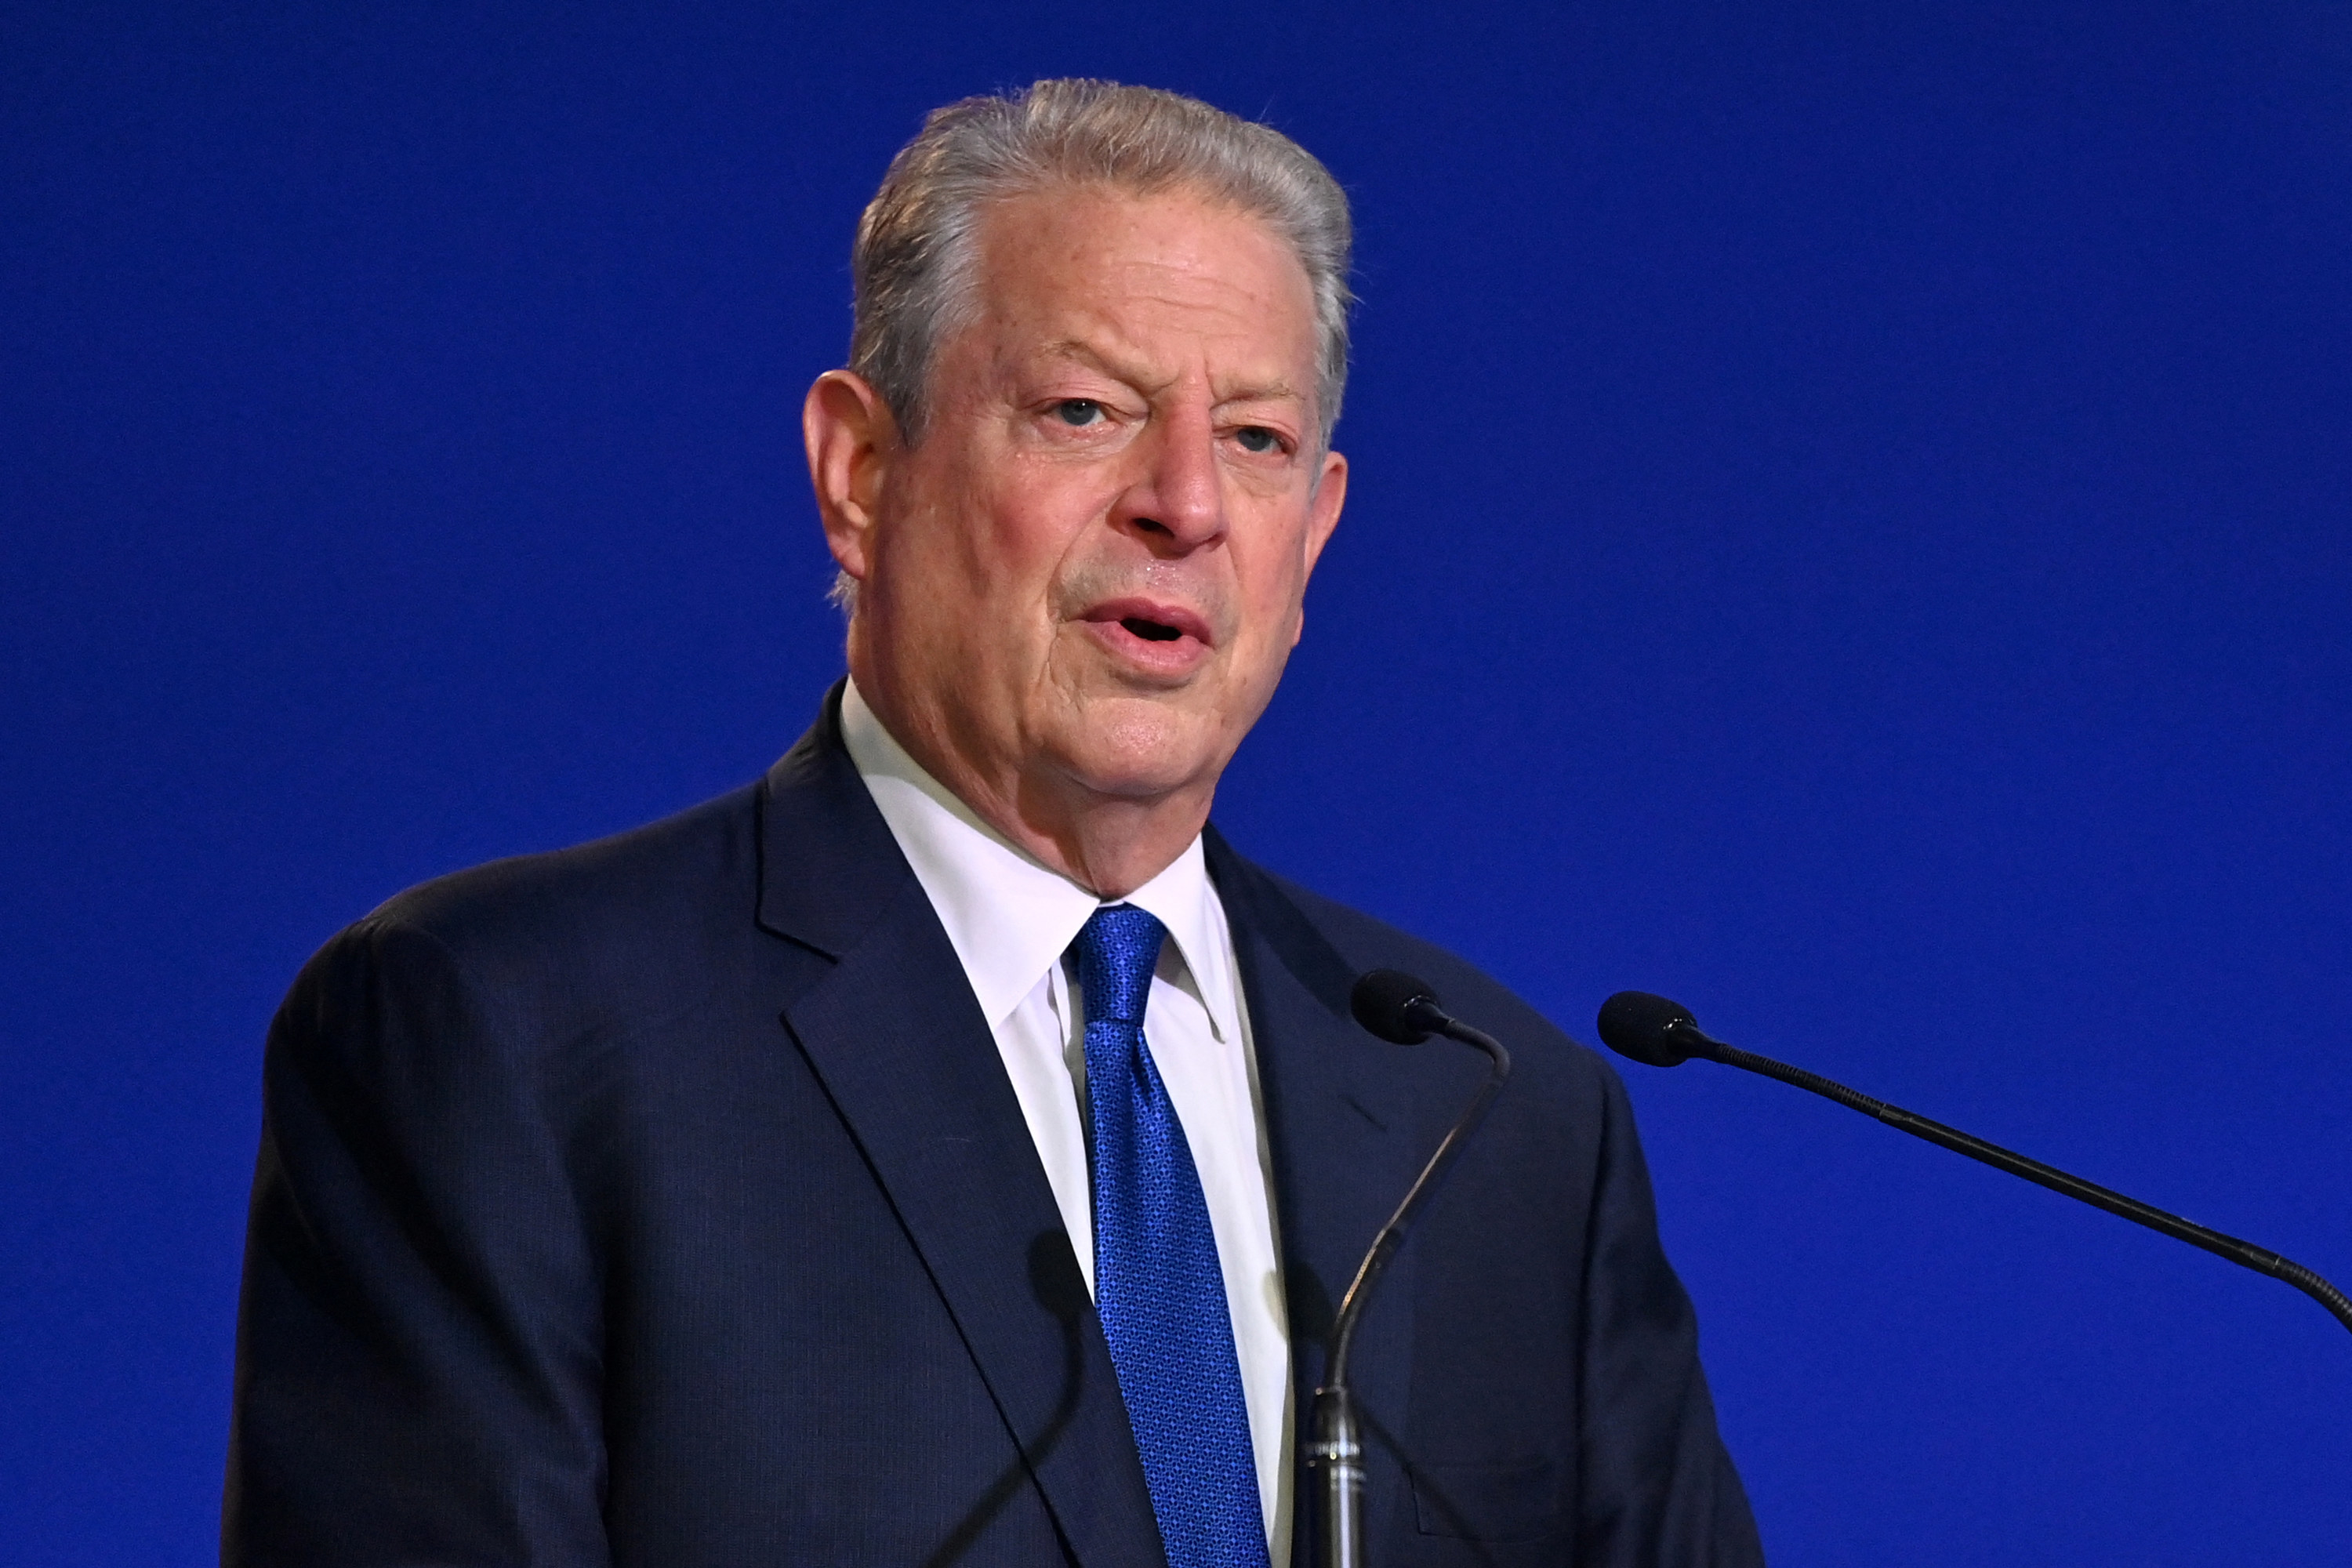 Al Gore giving a speech